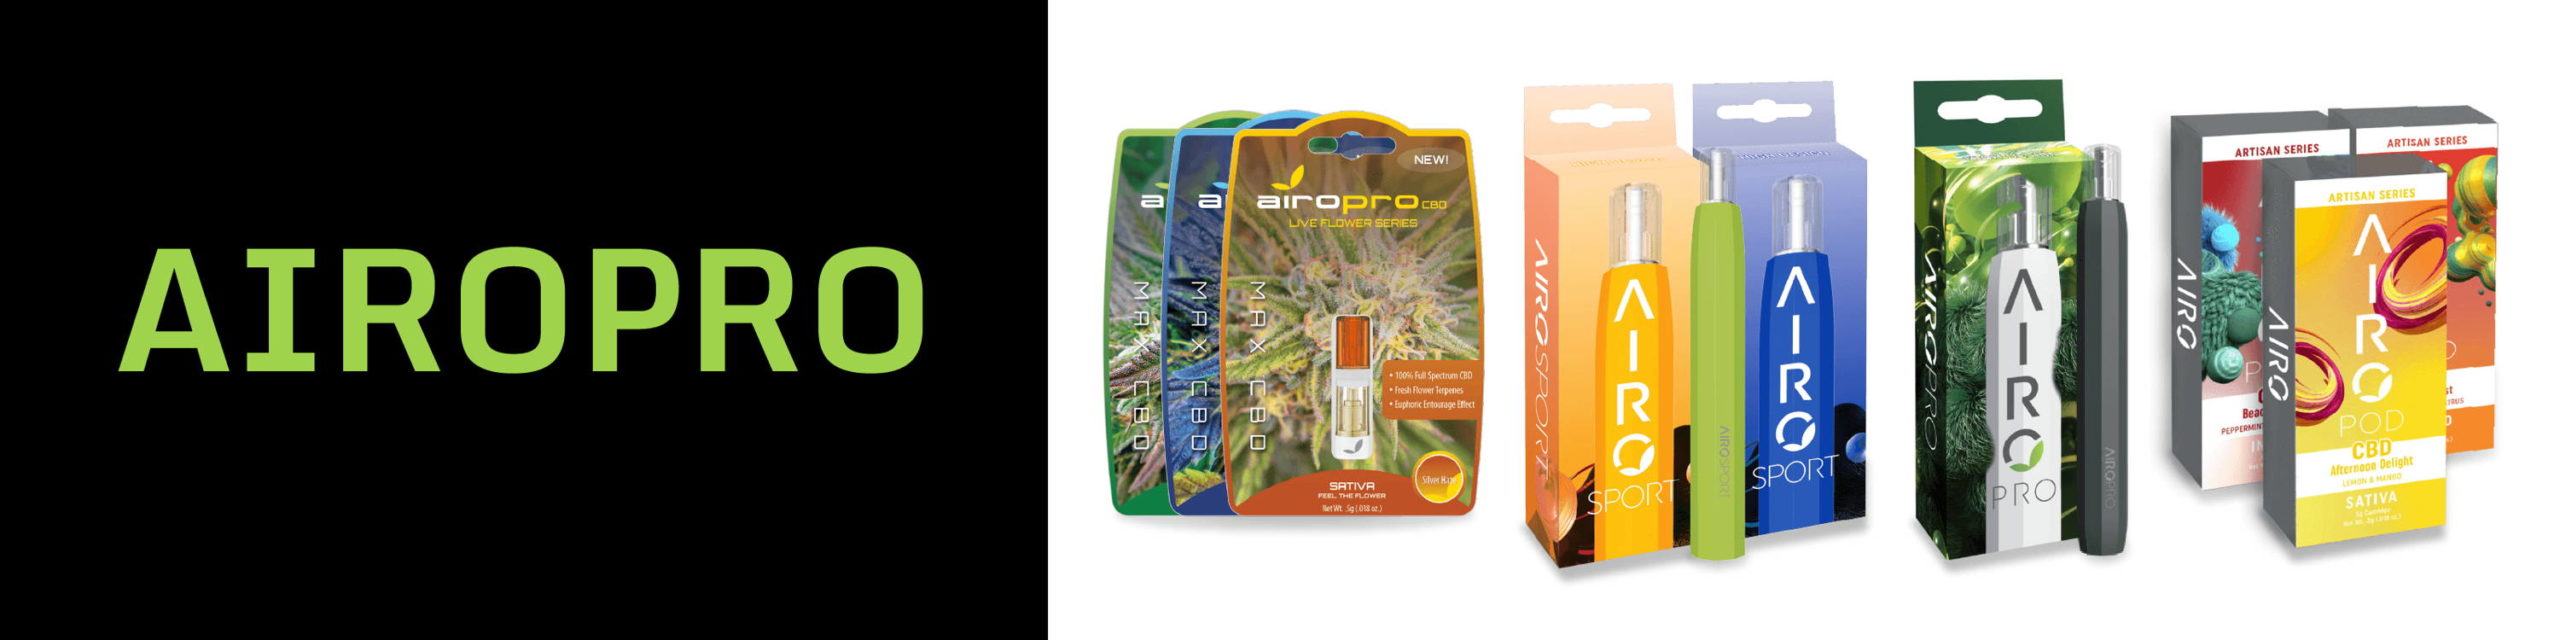 airopro cartridges, airo pro, airopro battery